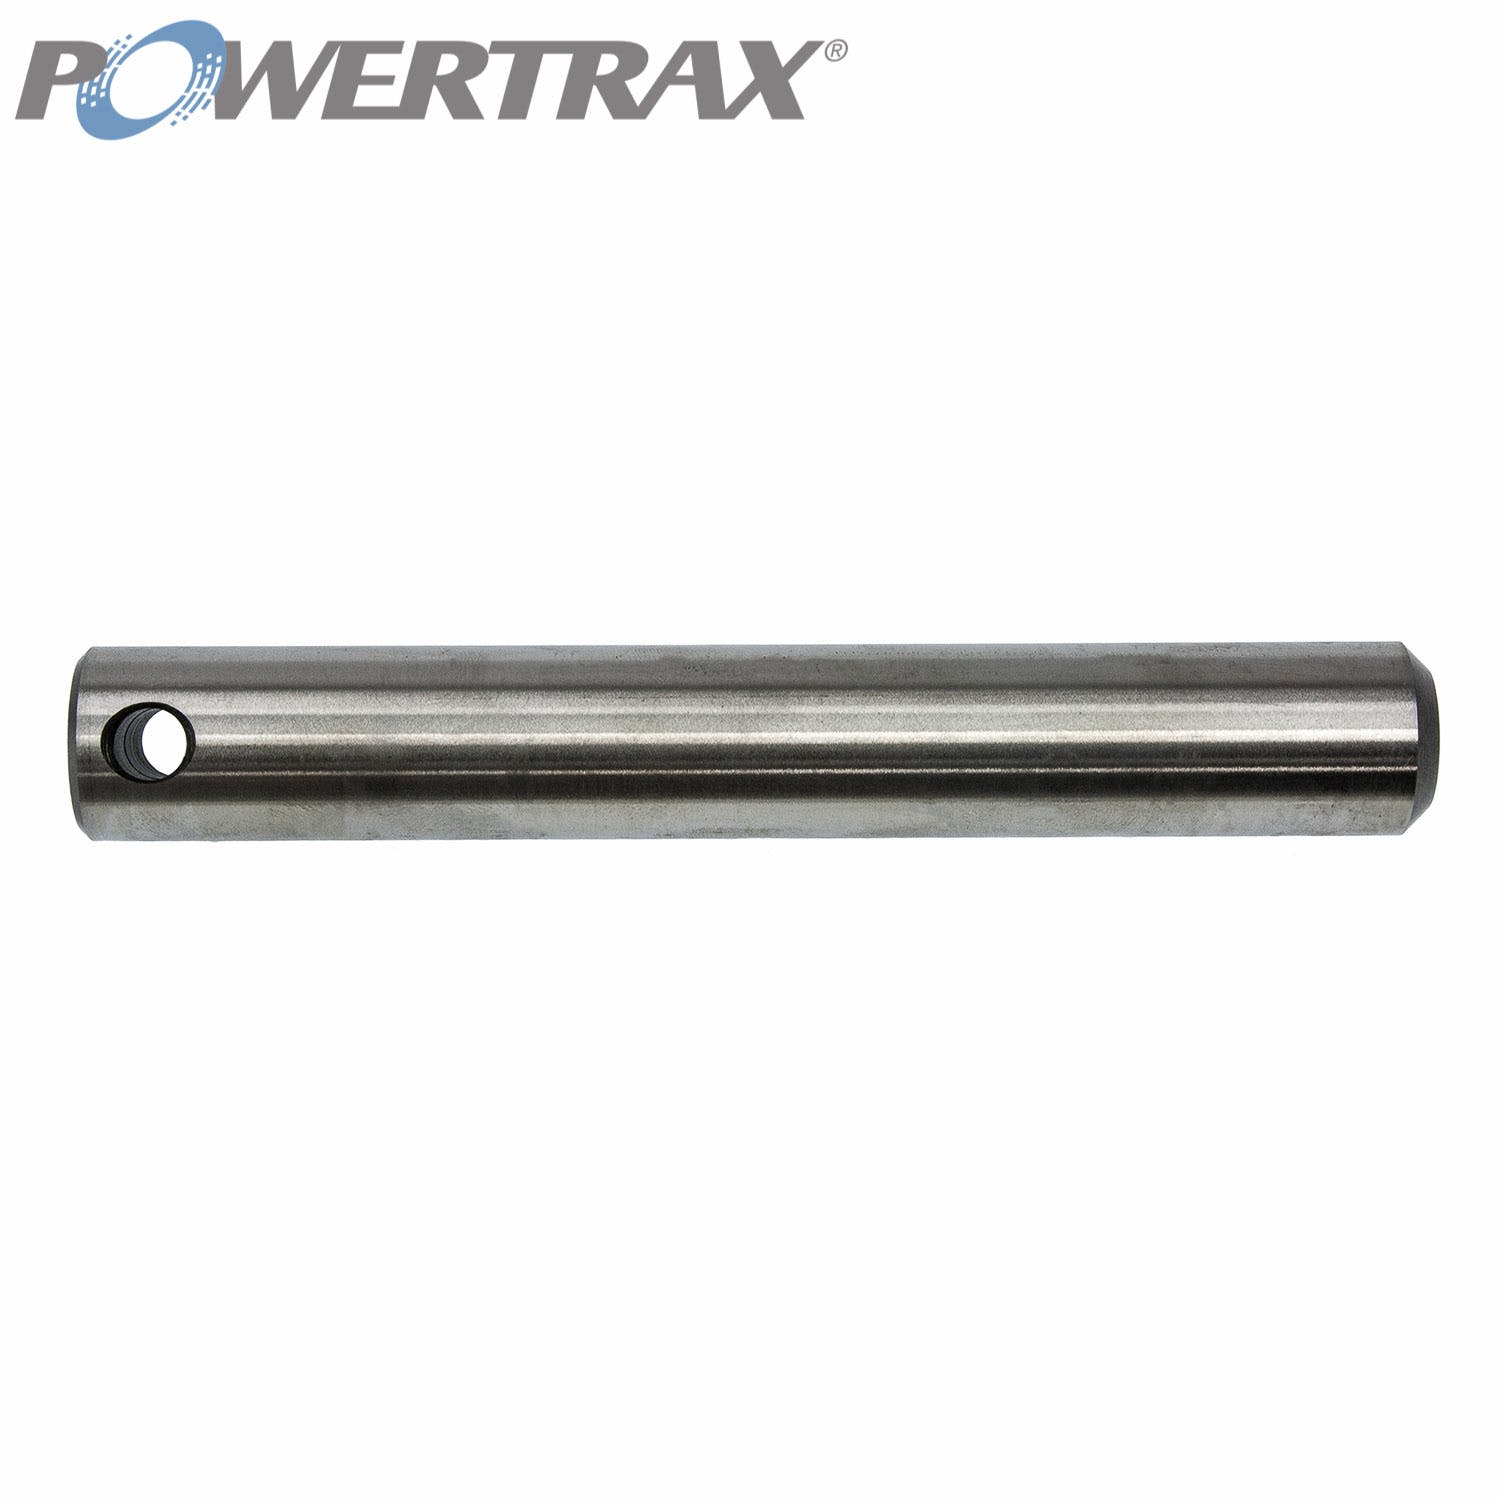 PowerTrax SA1710 Differential Pinion Shaft